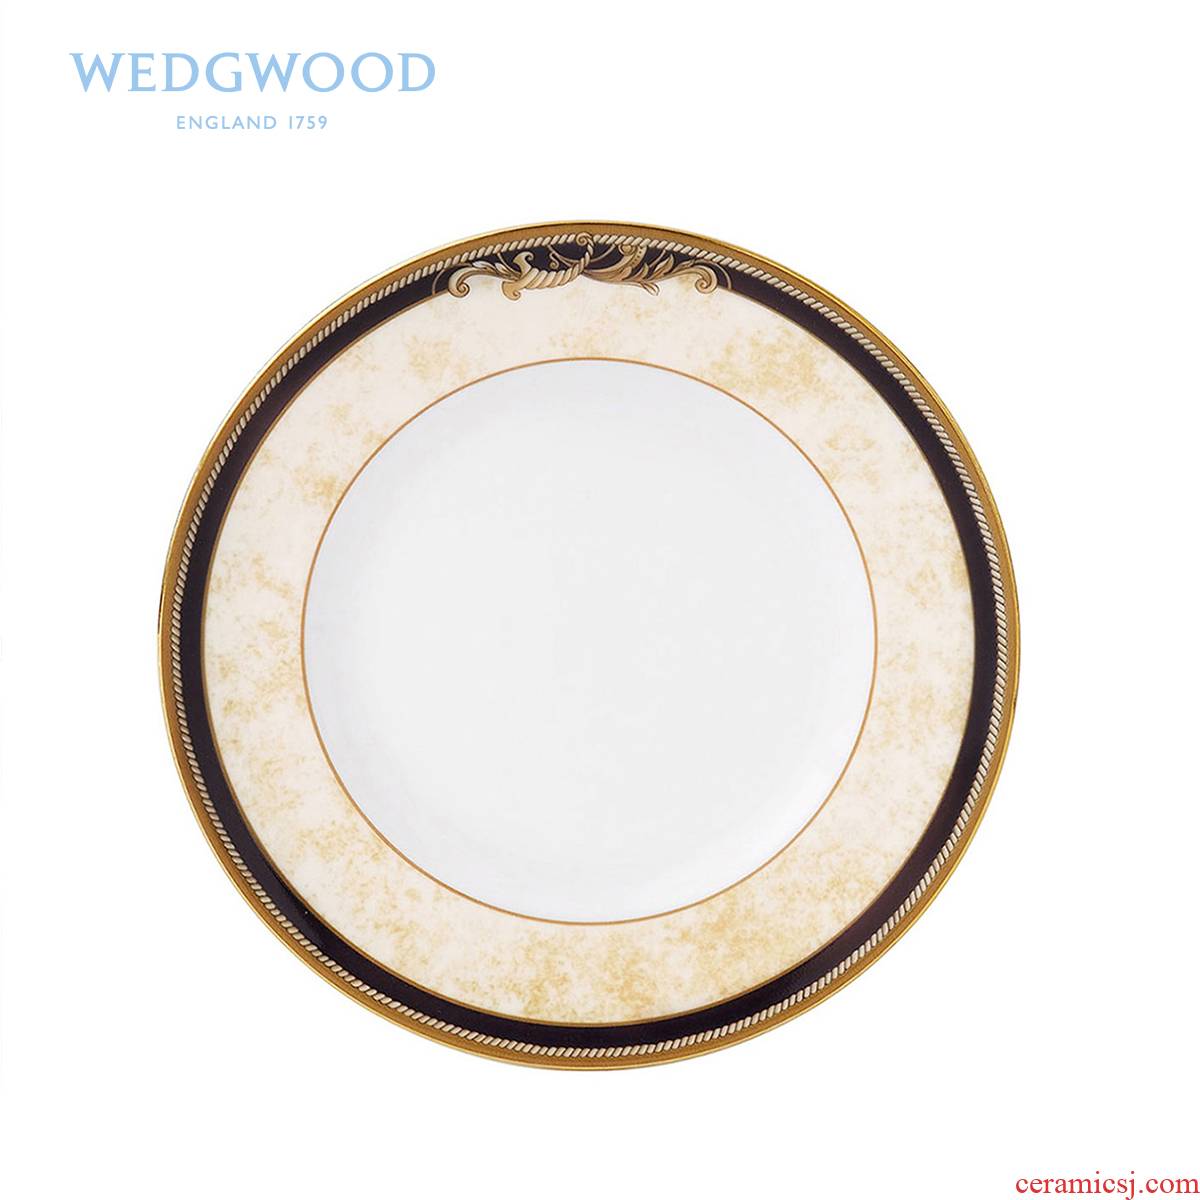 Wedgwood waterford Wedgwood Cornucopia the Cornucopia of 15/18/23/27/31 cm ipads China plates